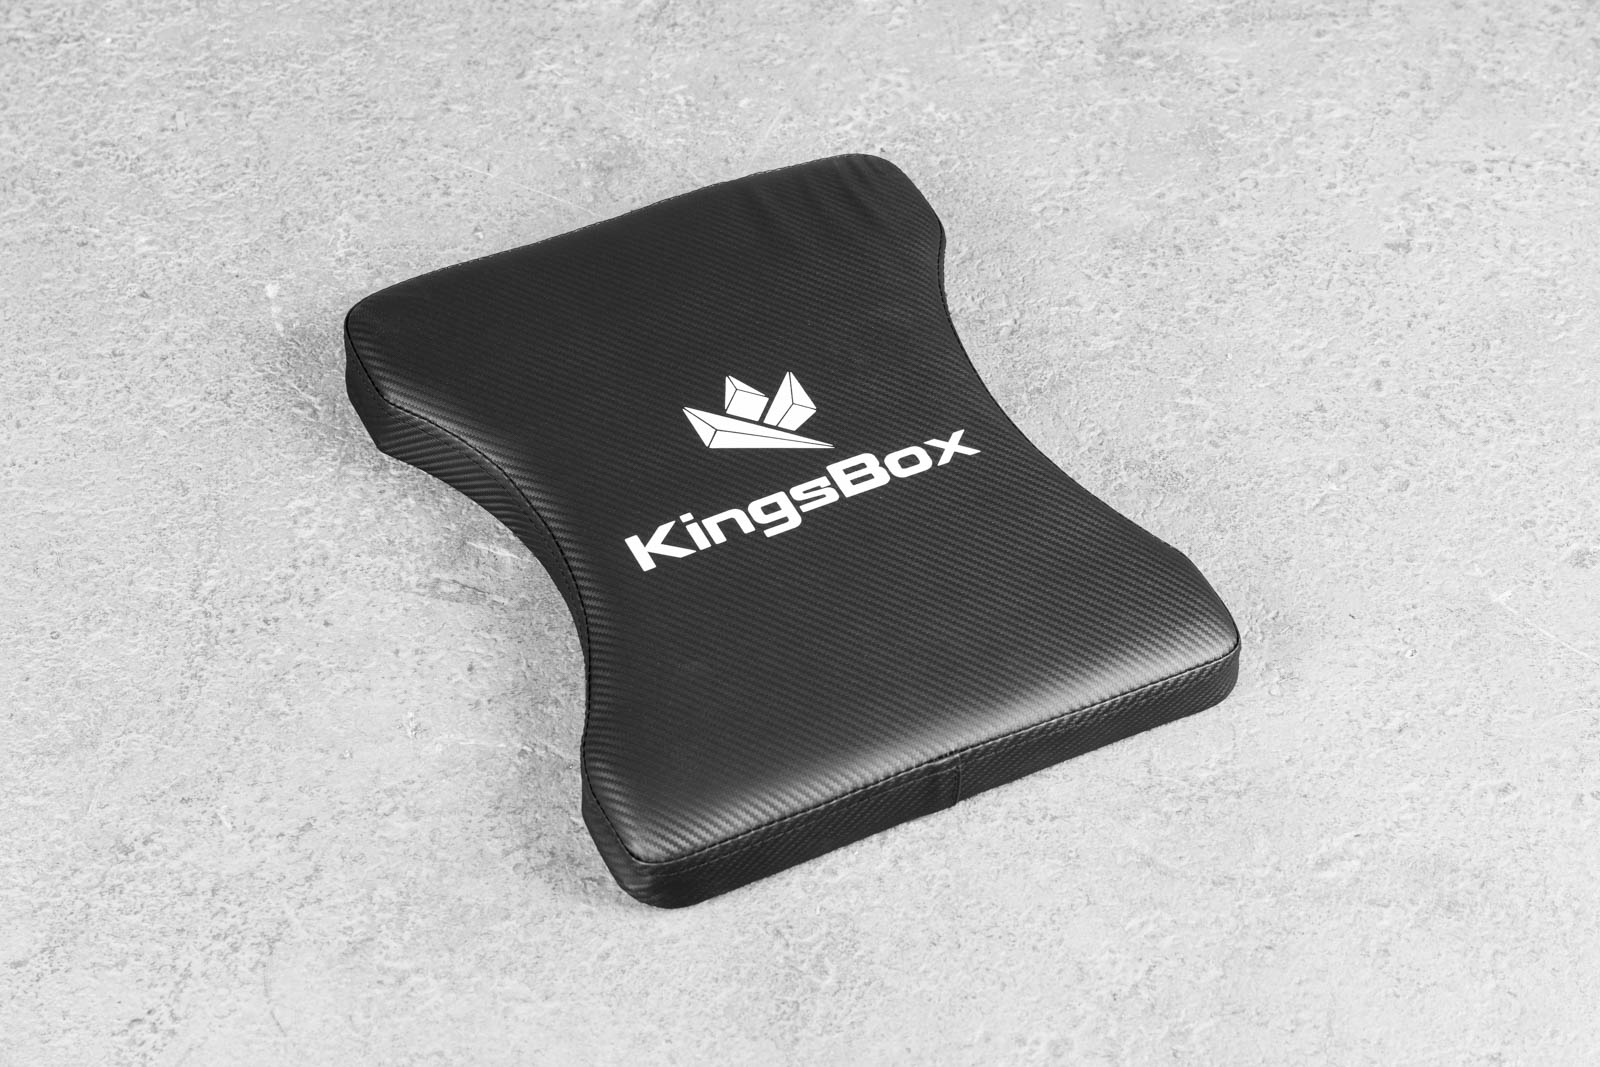 Kingsbox Handstand Mat